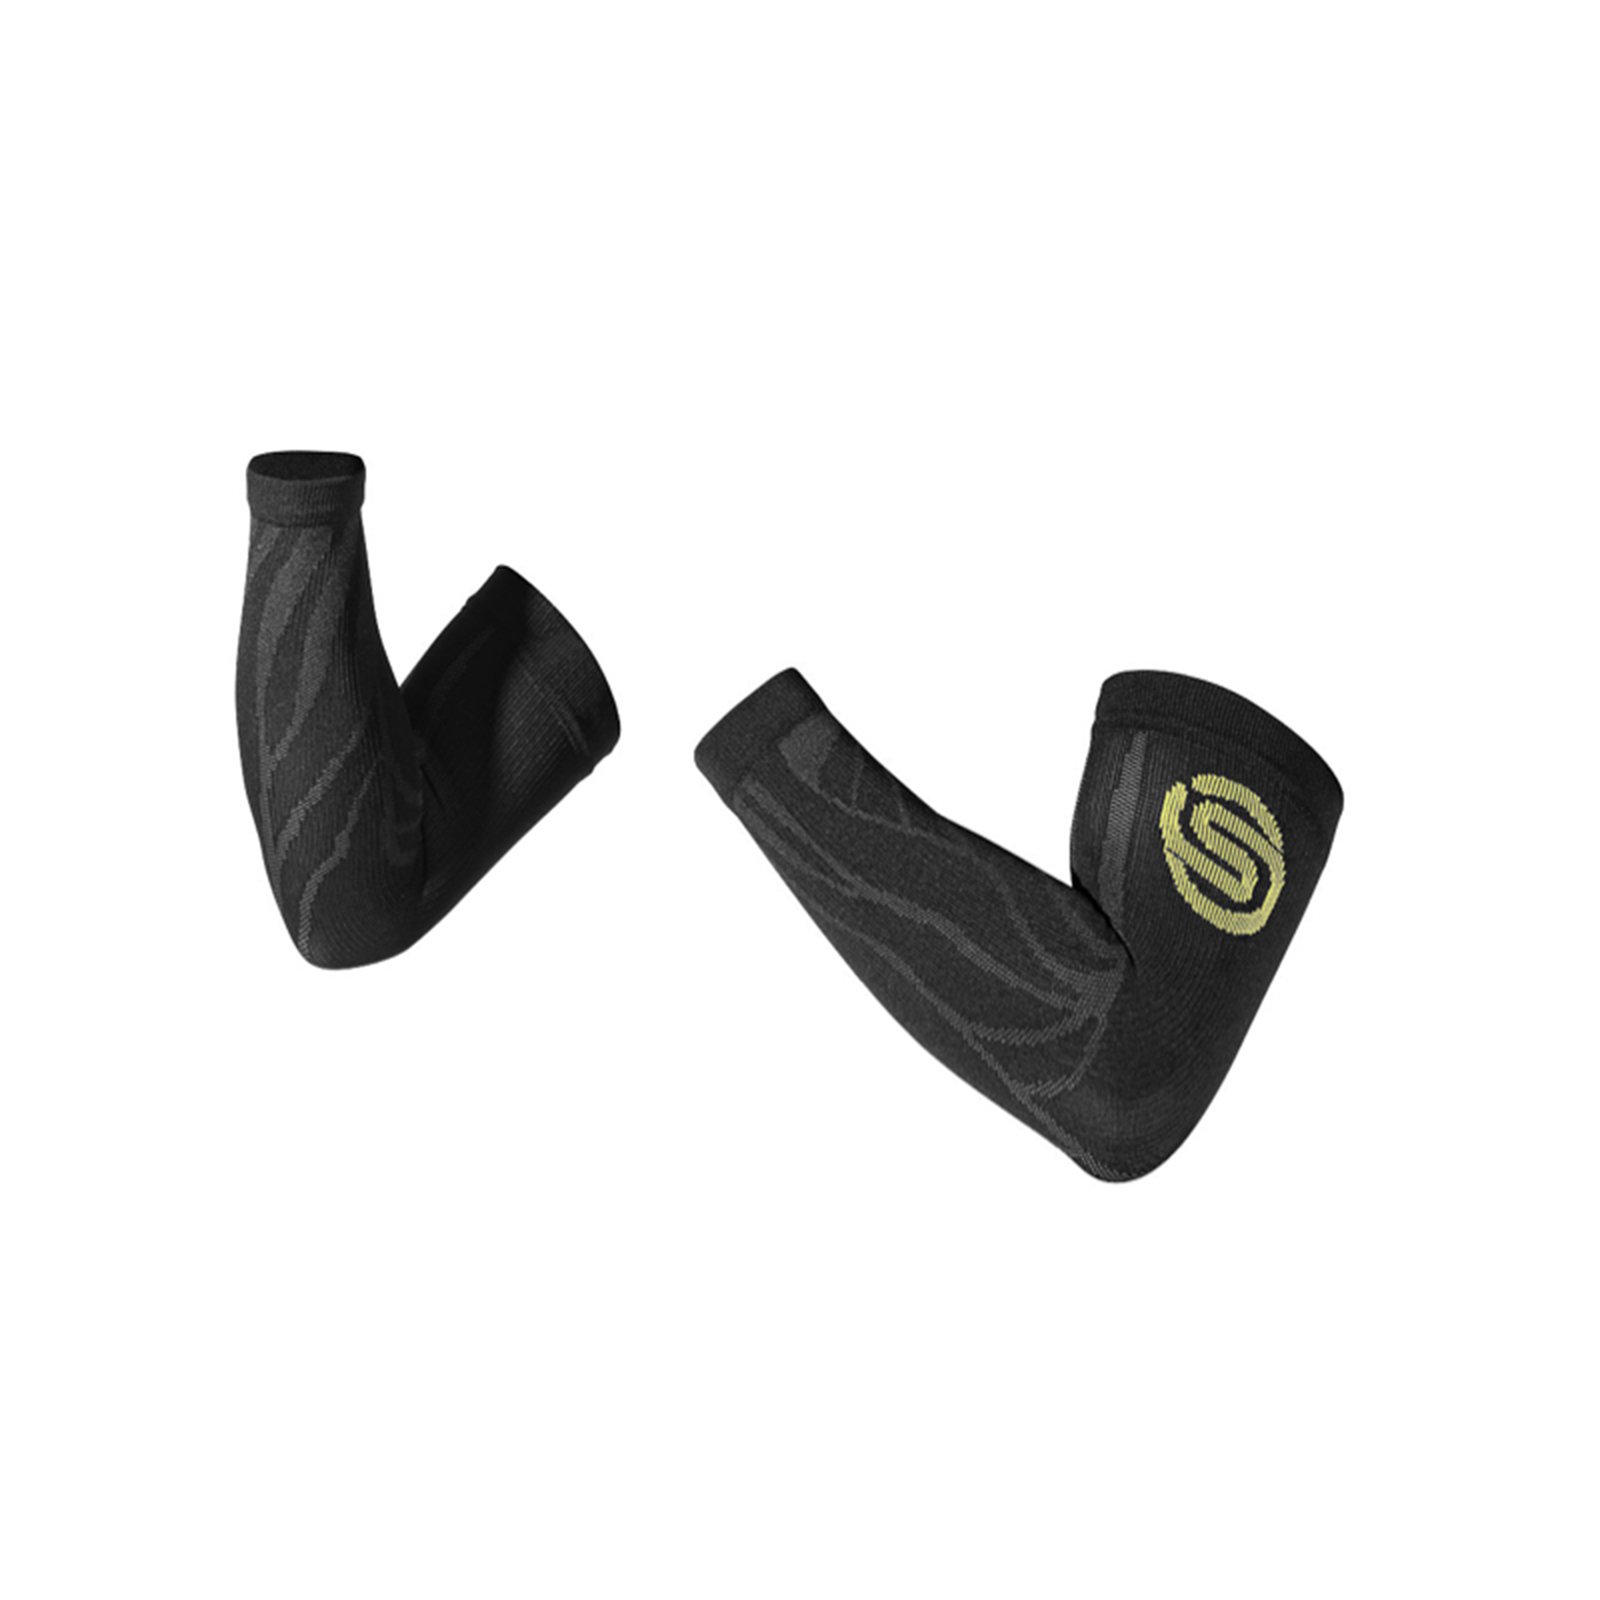 SKINS SERIES-3 Unisex Recovery MX Calf Sleeves Black